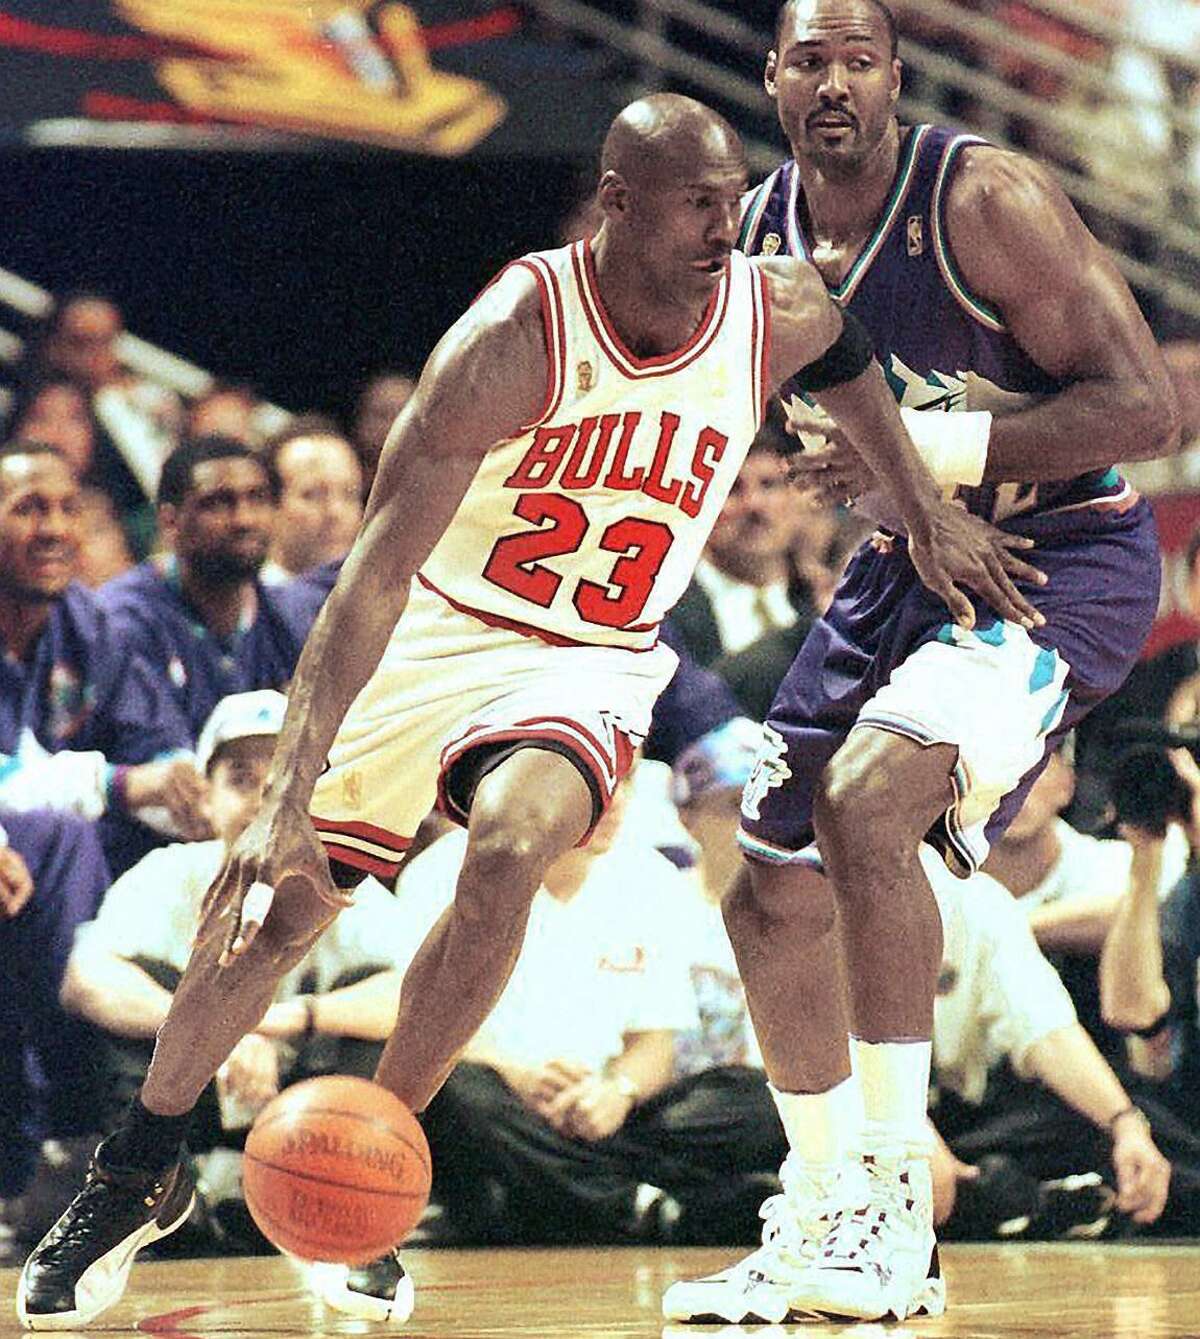 Did Michael Jordan face a Finals team this good?